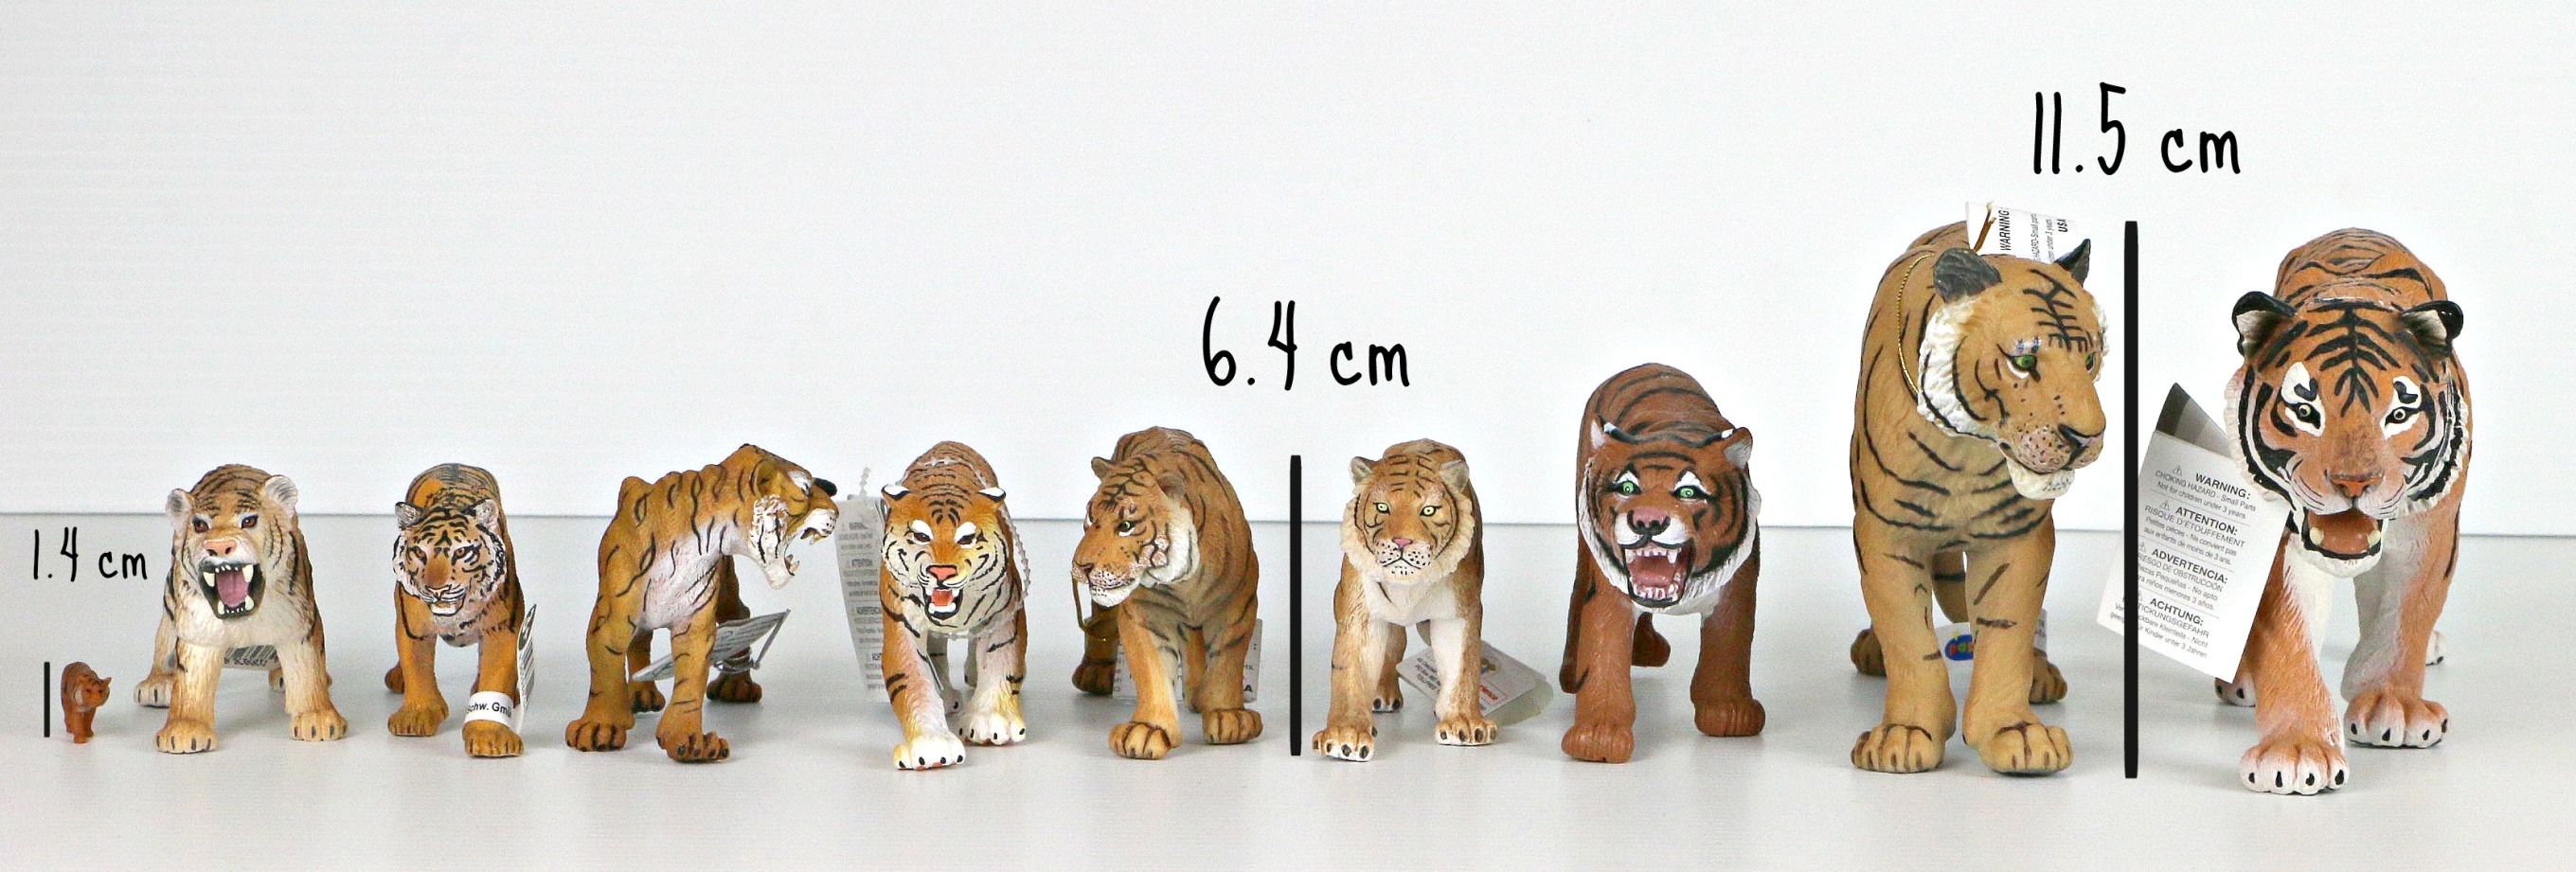 Size Comparisons of Animal Figurine Brands | MiniZoo Blog - MiniZoo